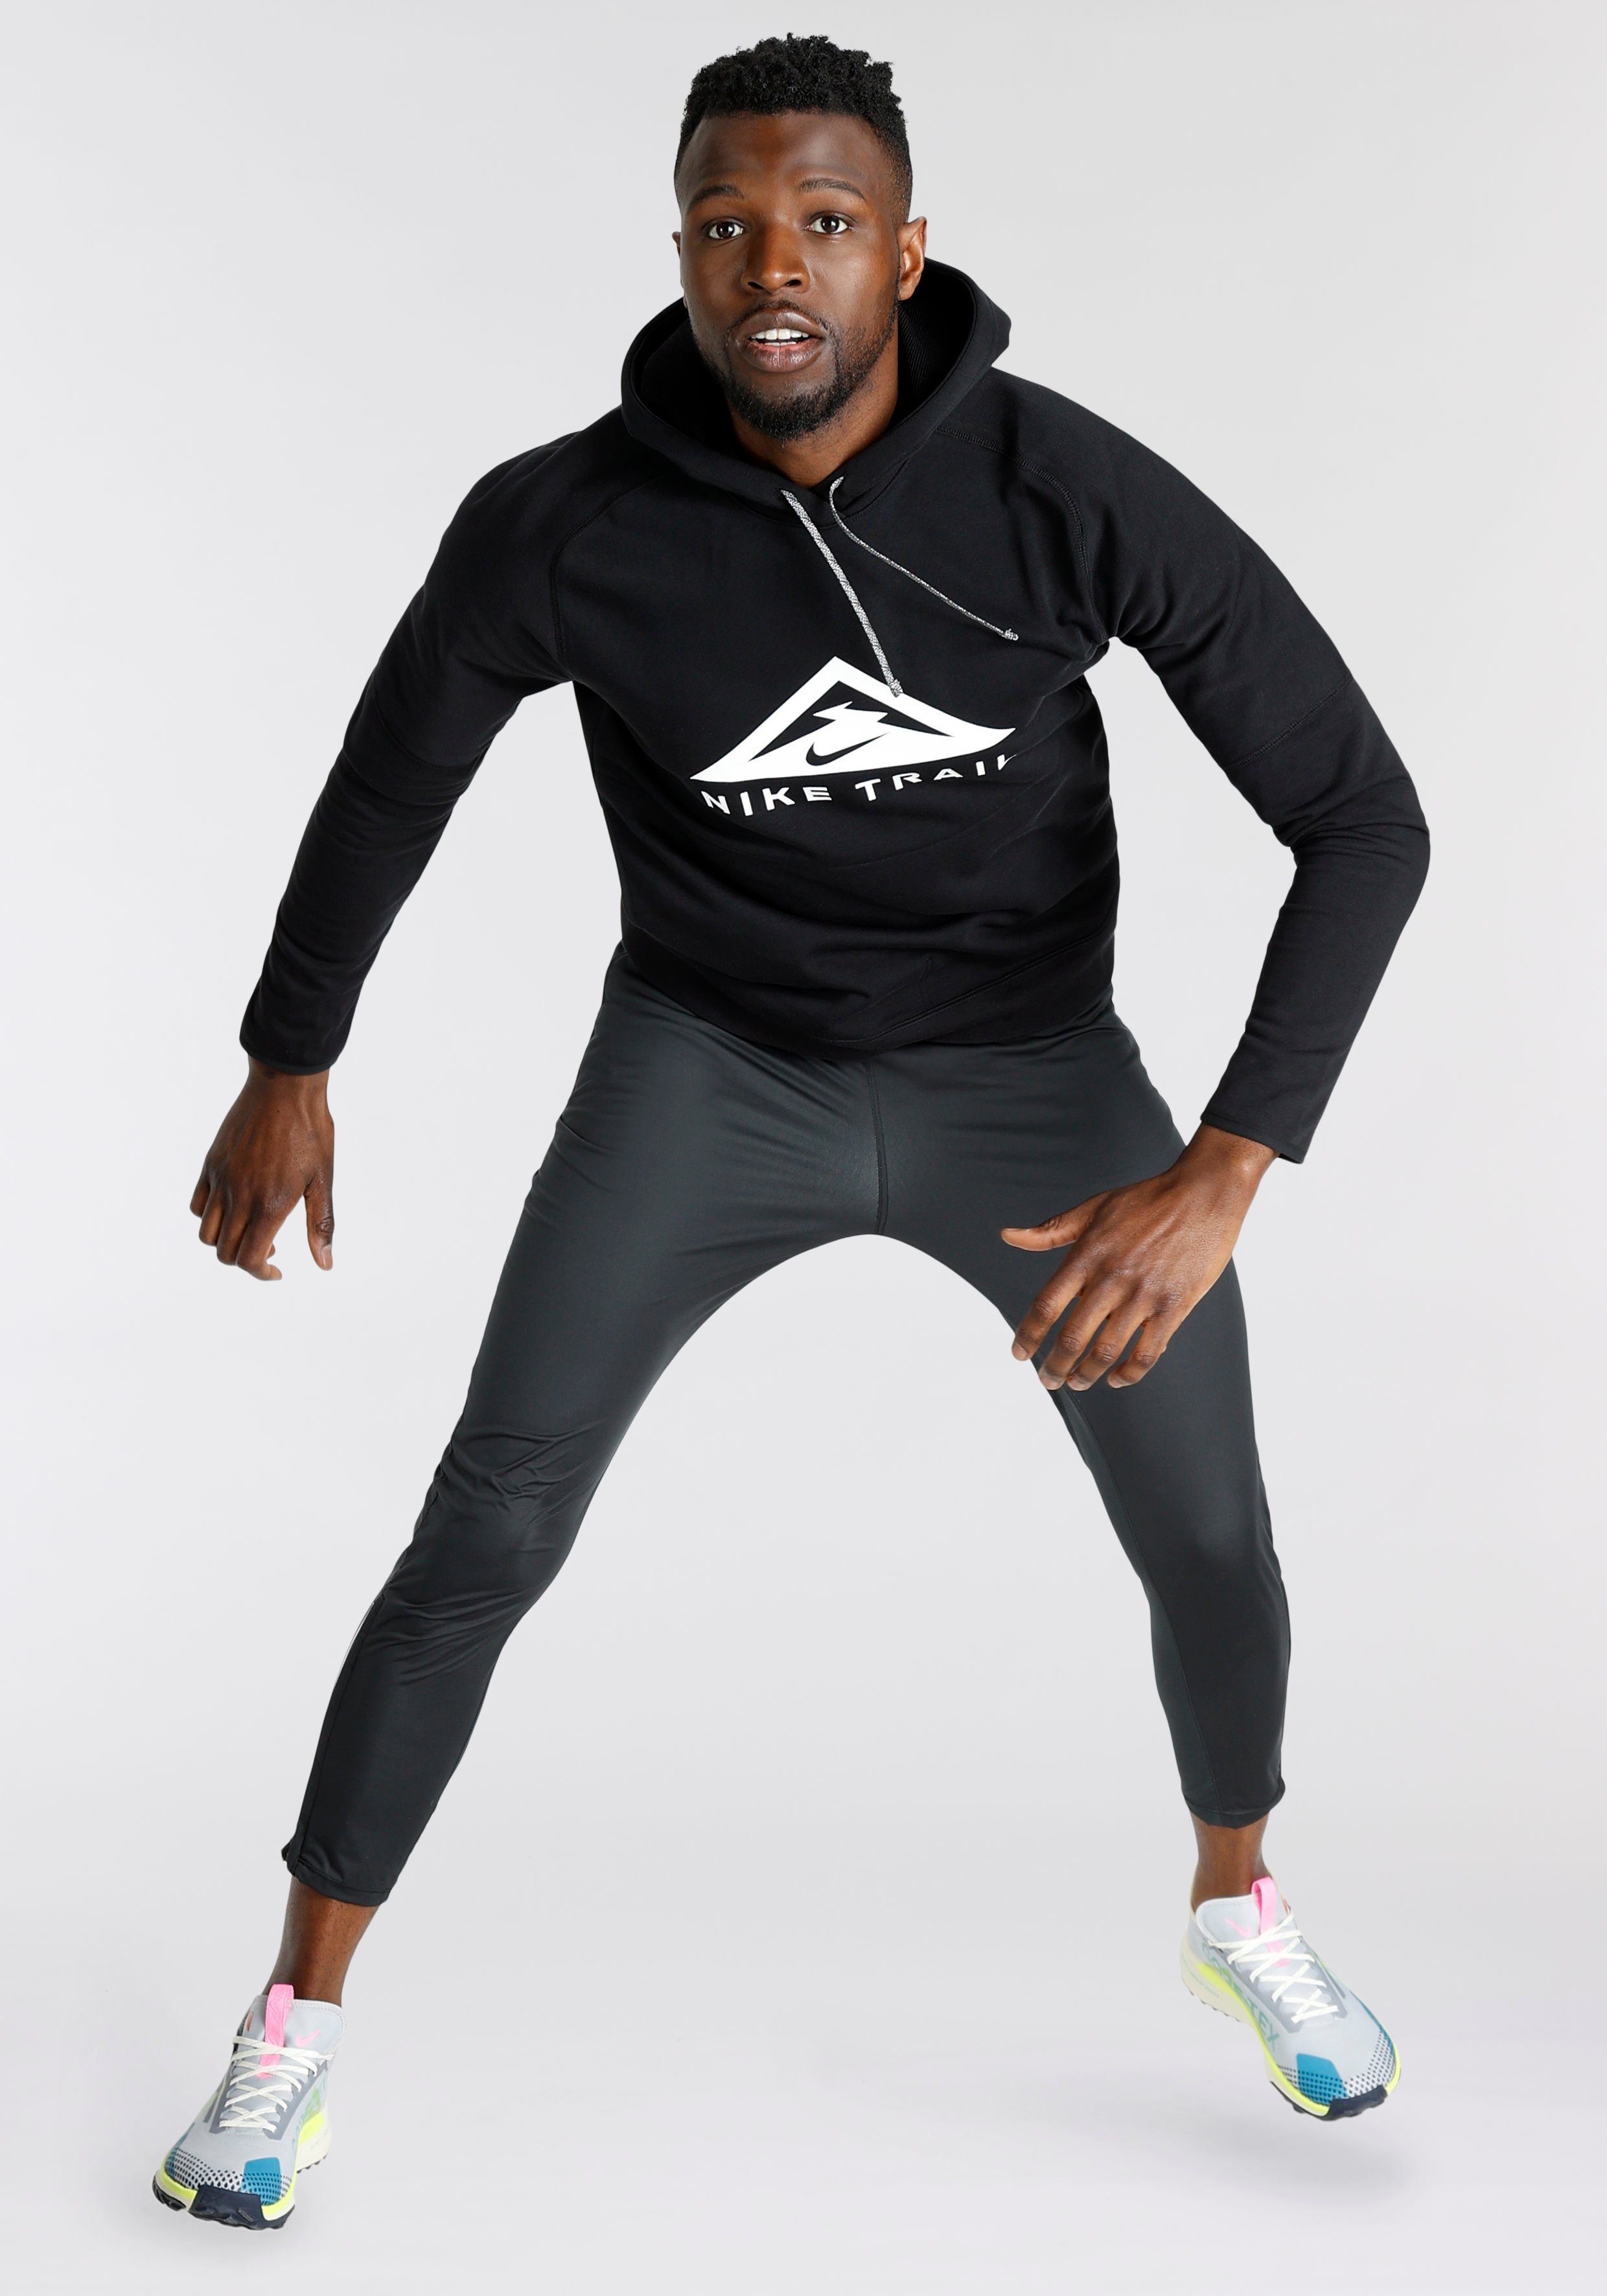 Nike Kapuzensweatshirt DRI-FIT TRAIL PULLOVER TRAIL RUNNING MEN'S BLACK/BLACK/WHITE HOODIE MAGIC HOUR